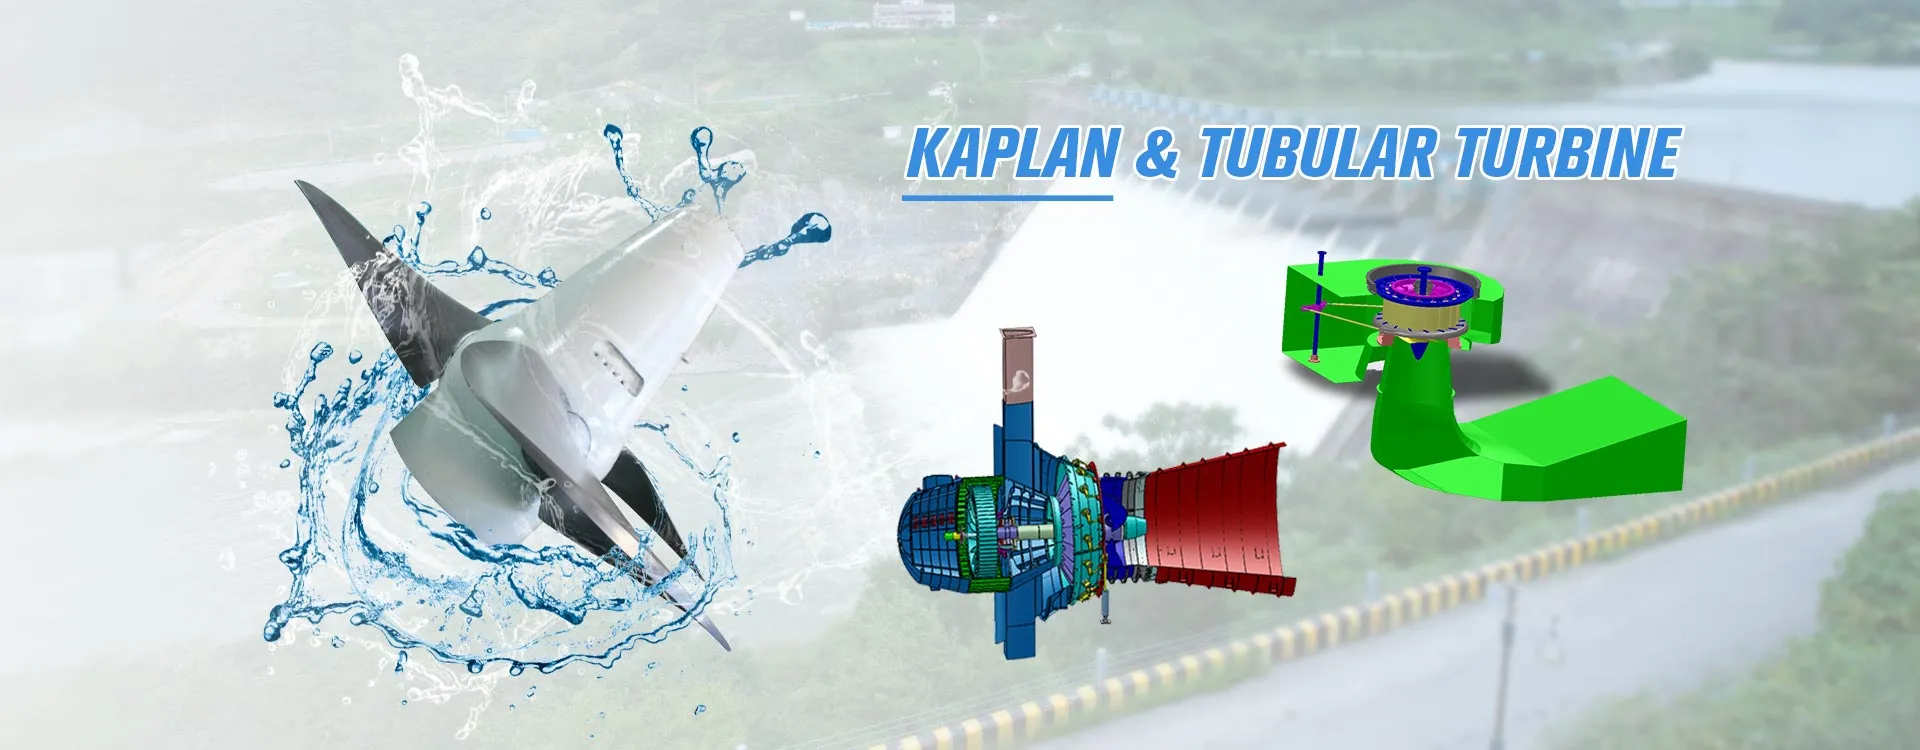 Turbina Kaplan e Tubular